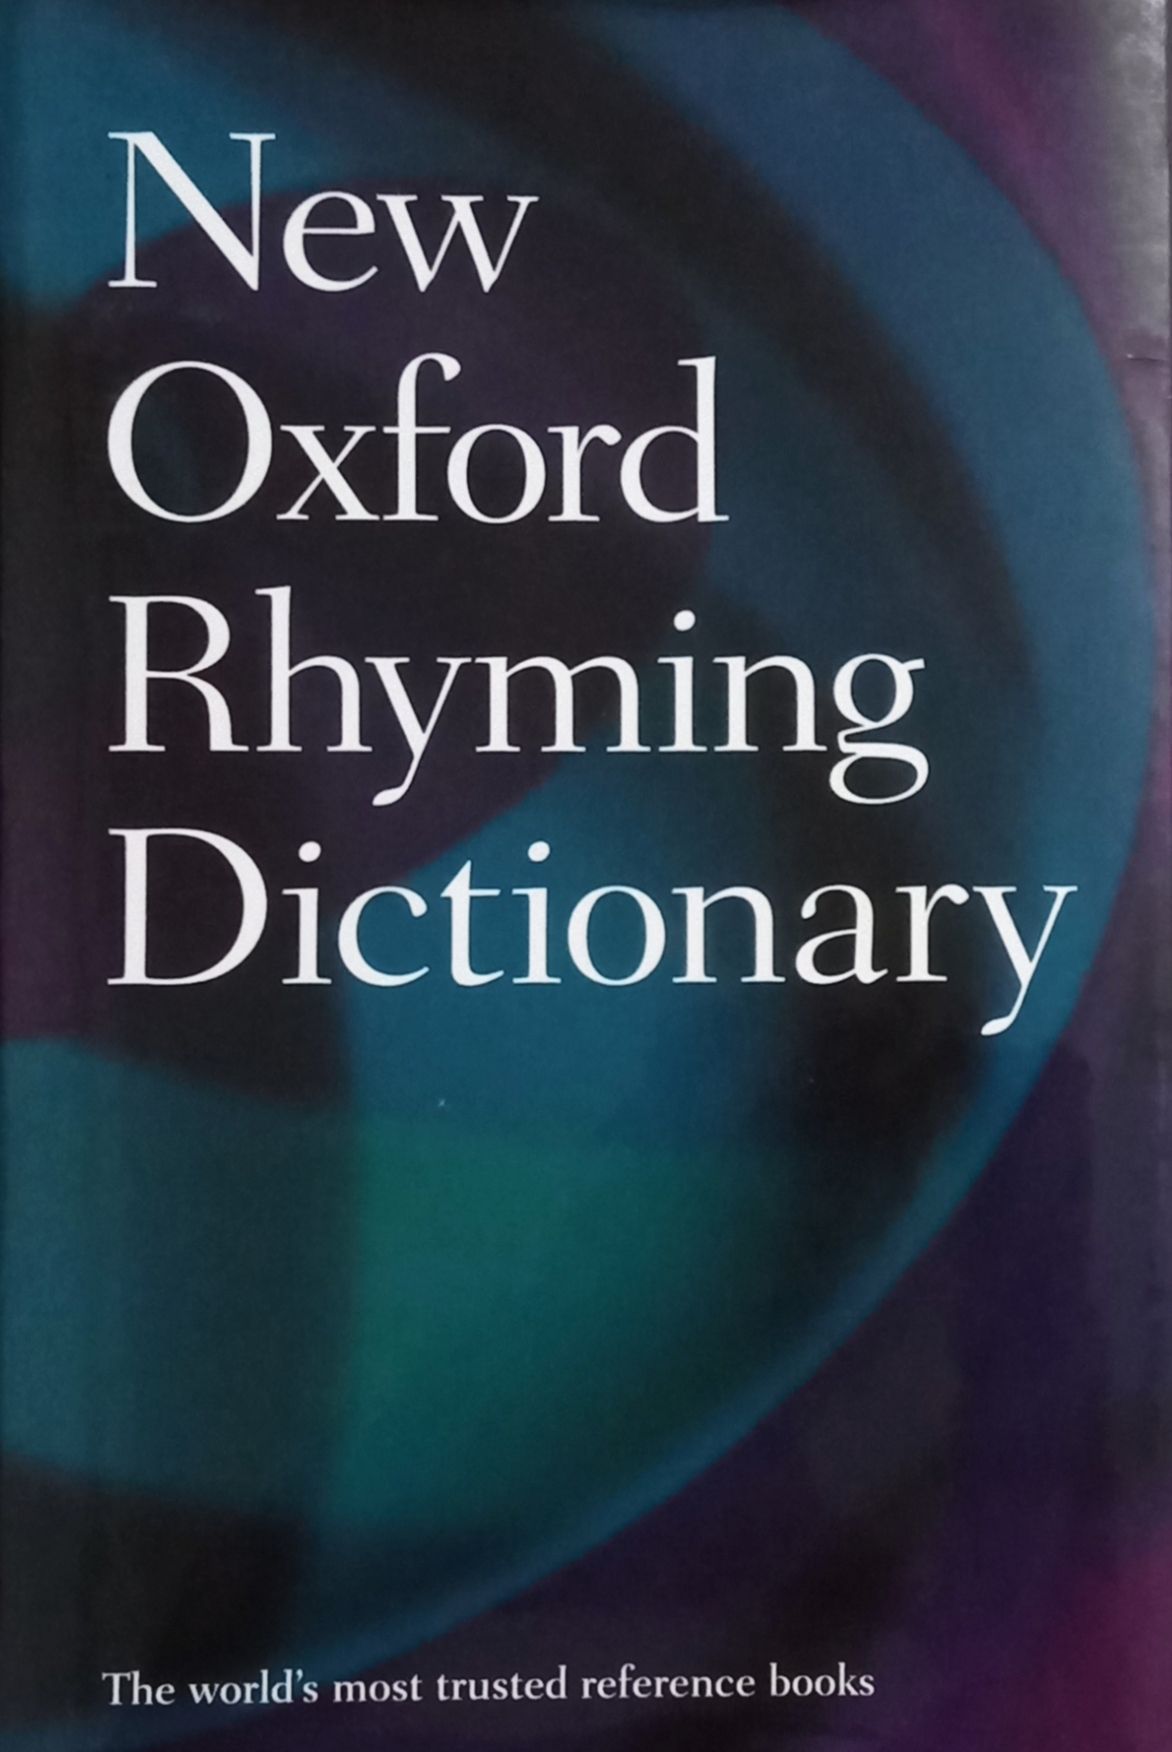 New Oxford Rhyming Dictionary
(Hardback)